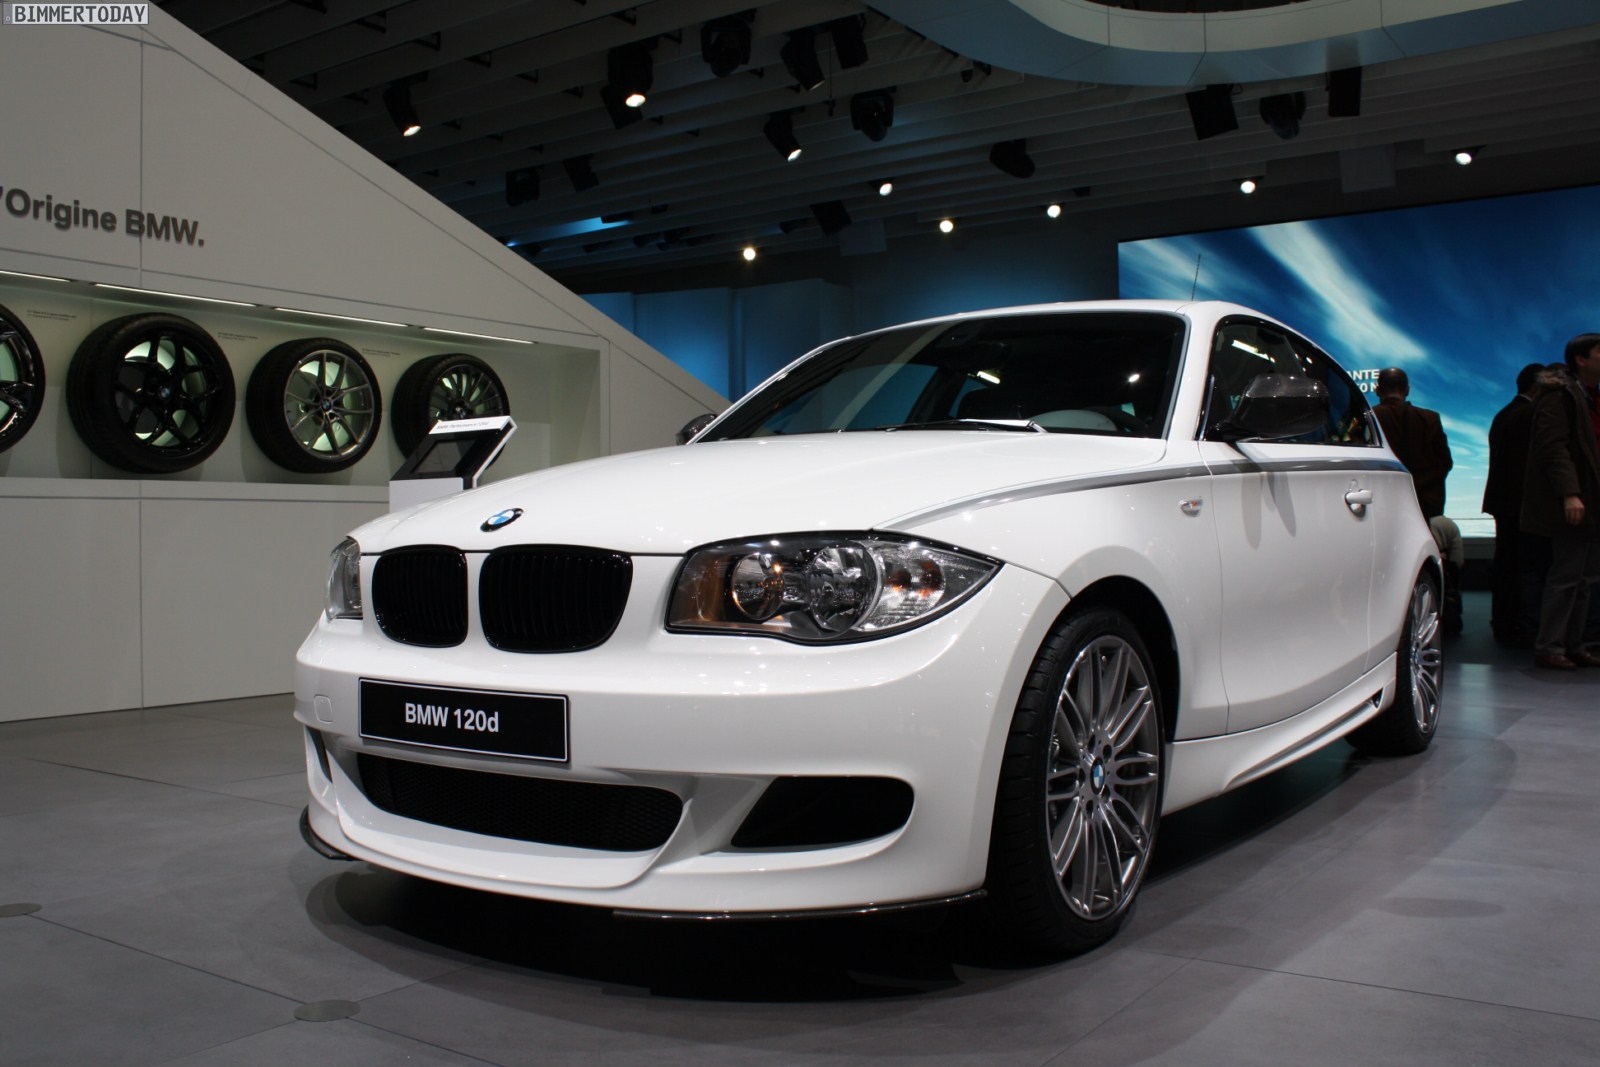 2011 Geneva: BMW 120d Hatchback with BMW Performance Parts